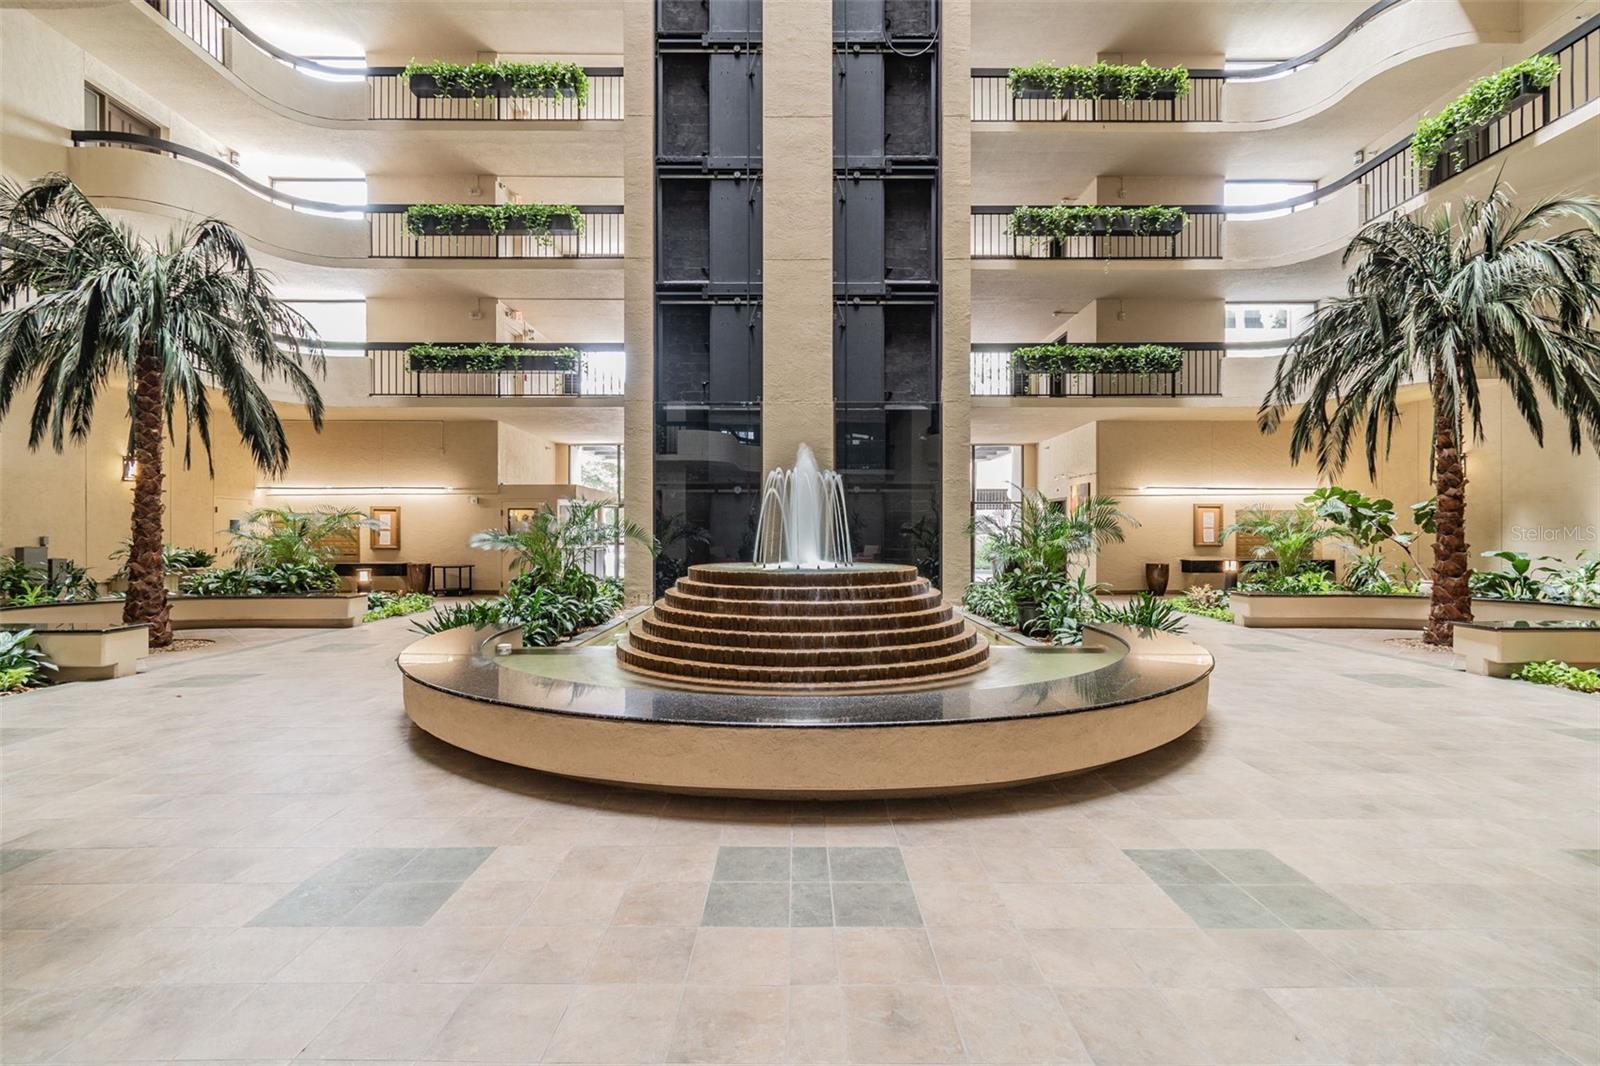 The Atrium lobby and its smooth elevators